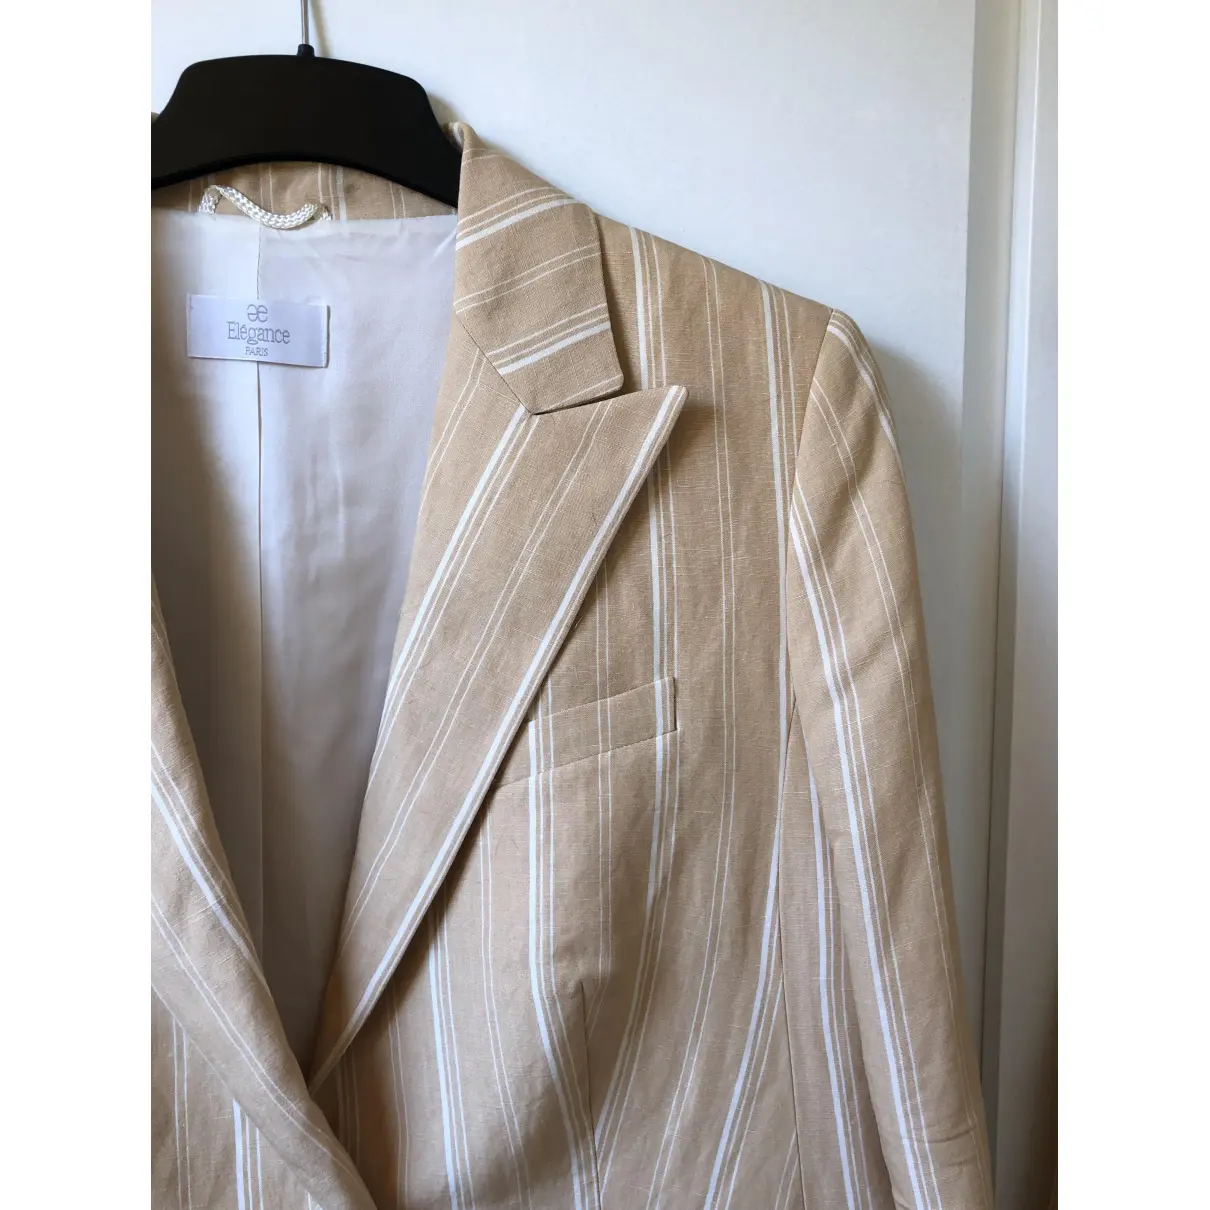 Buy Elegance Paris Linen suit jacket online